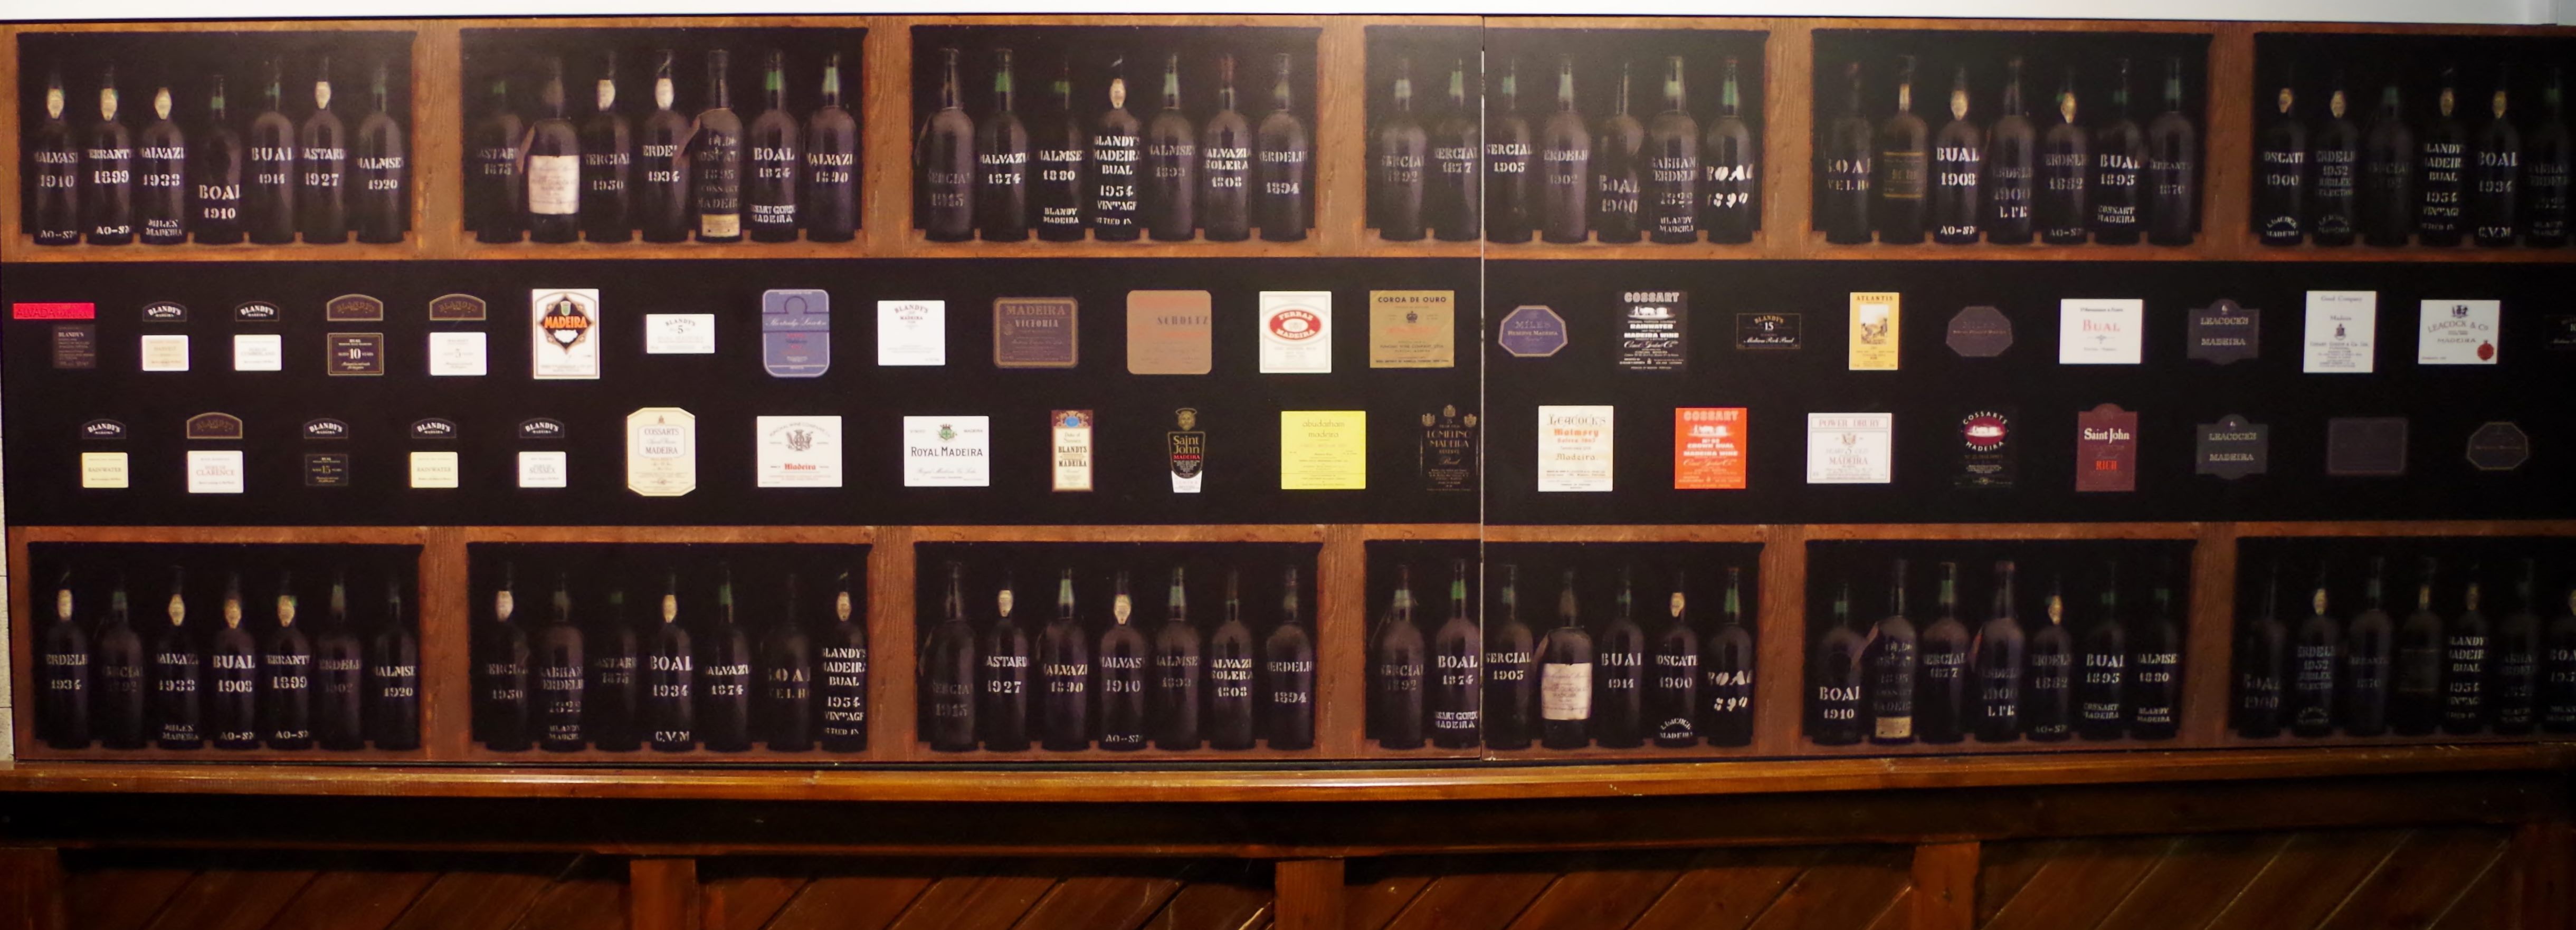 Blandy's Madeira wine range